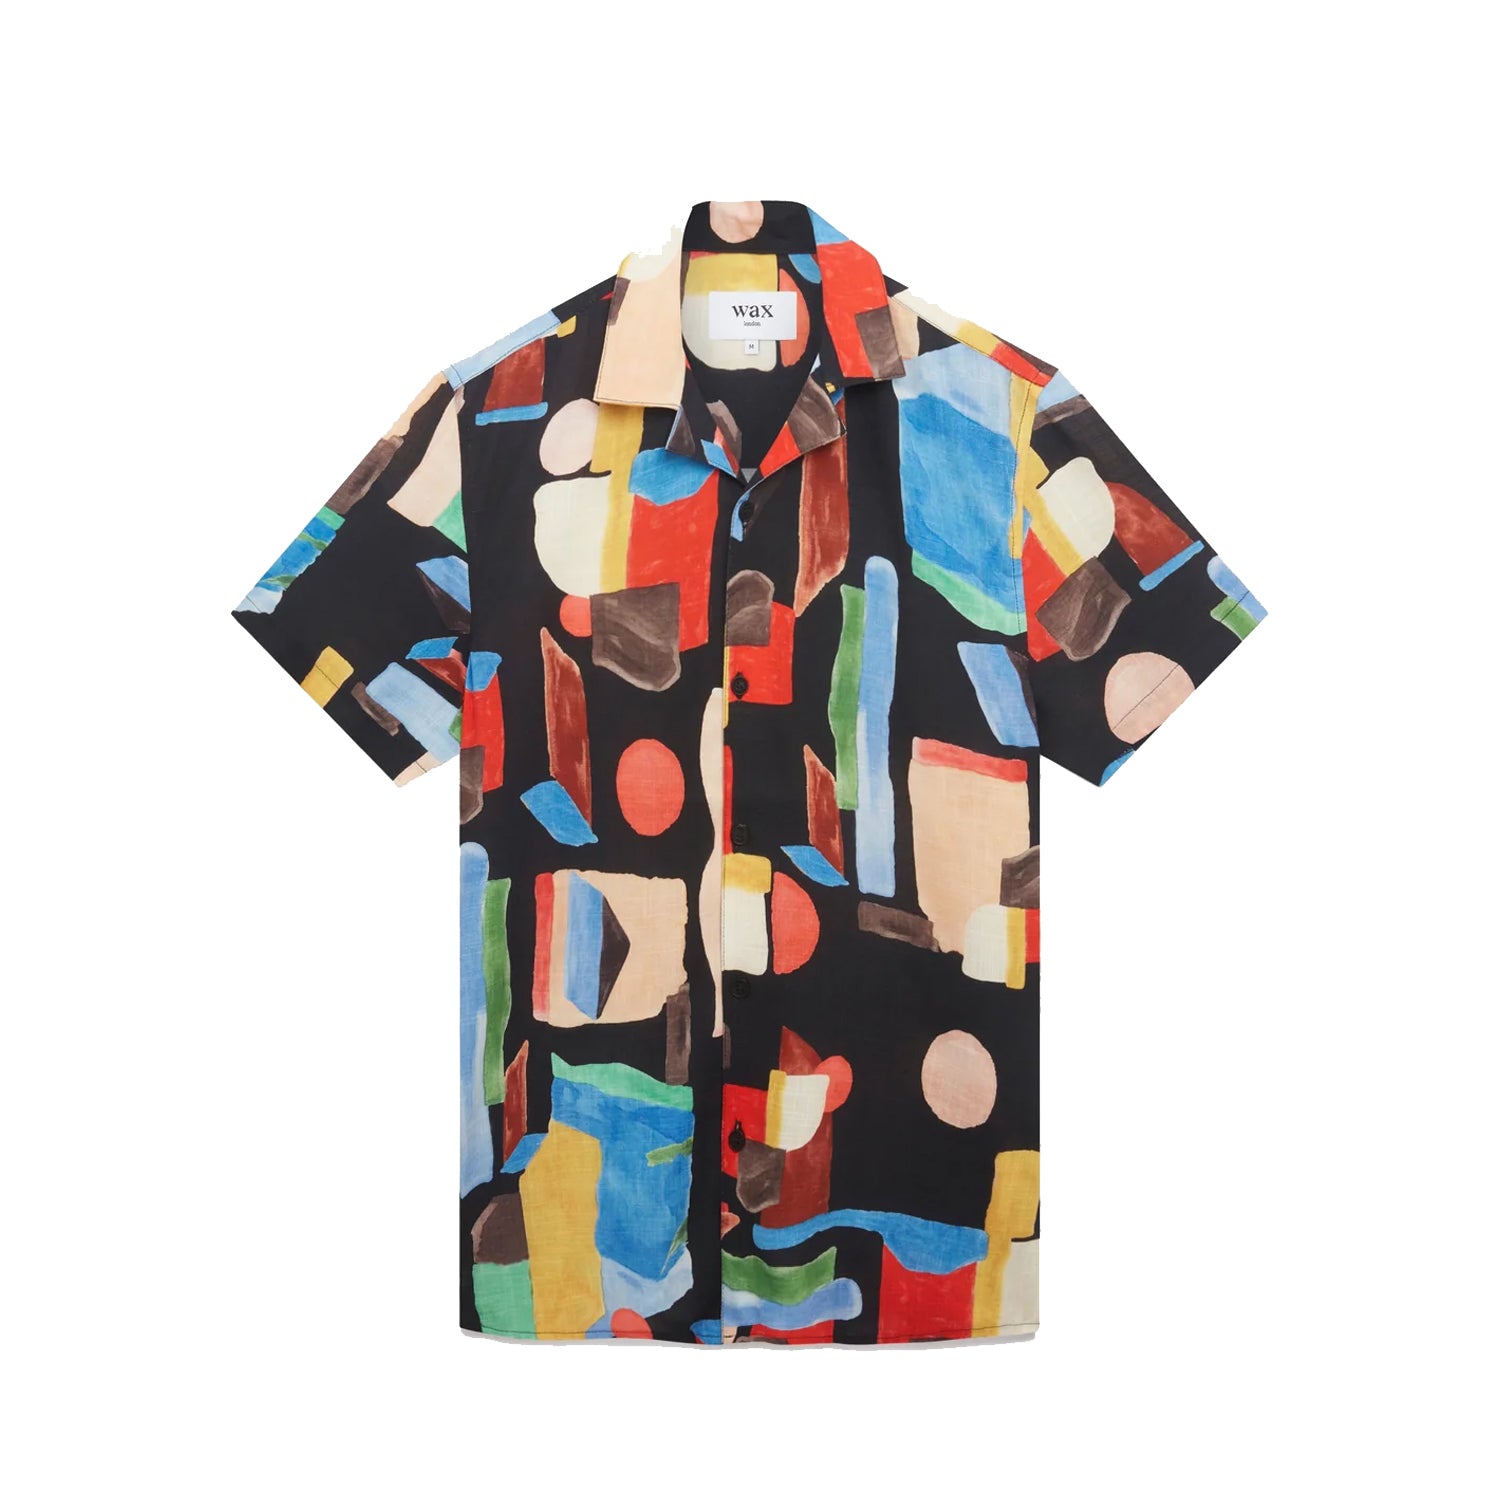 Didcot S/S shirt - Pablo